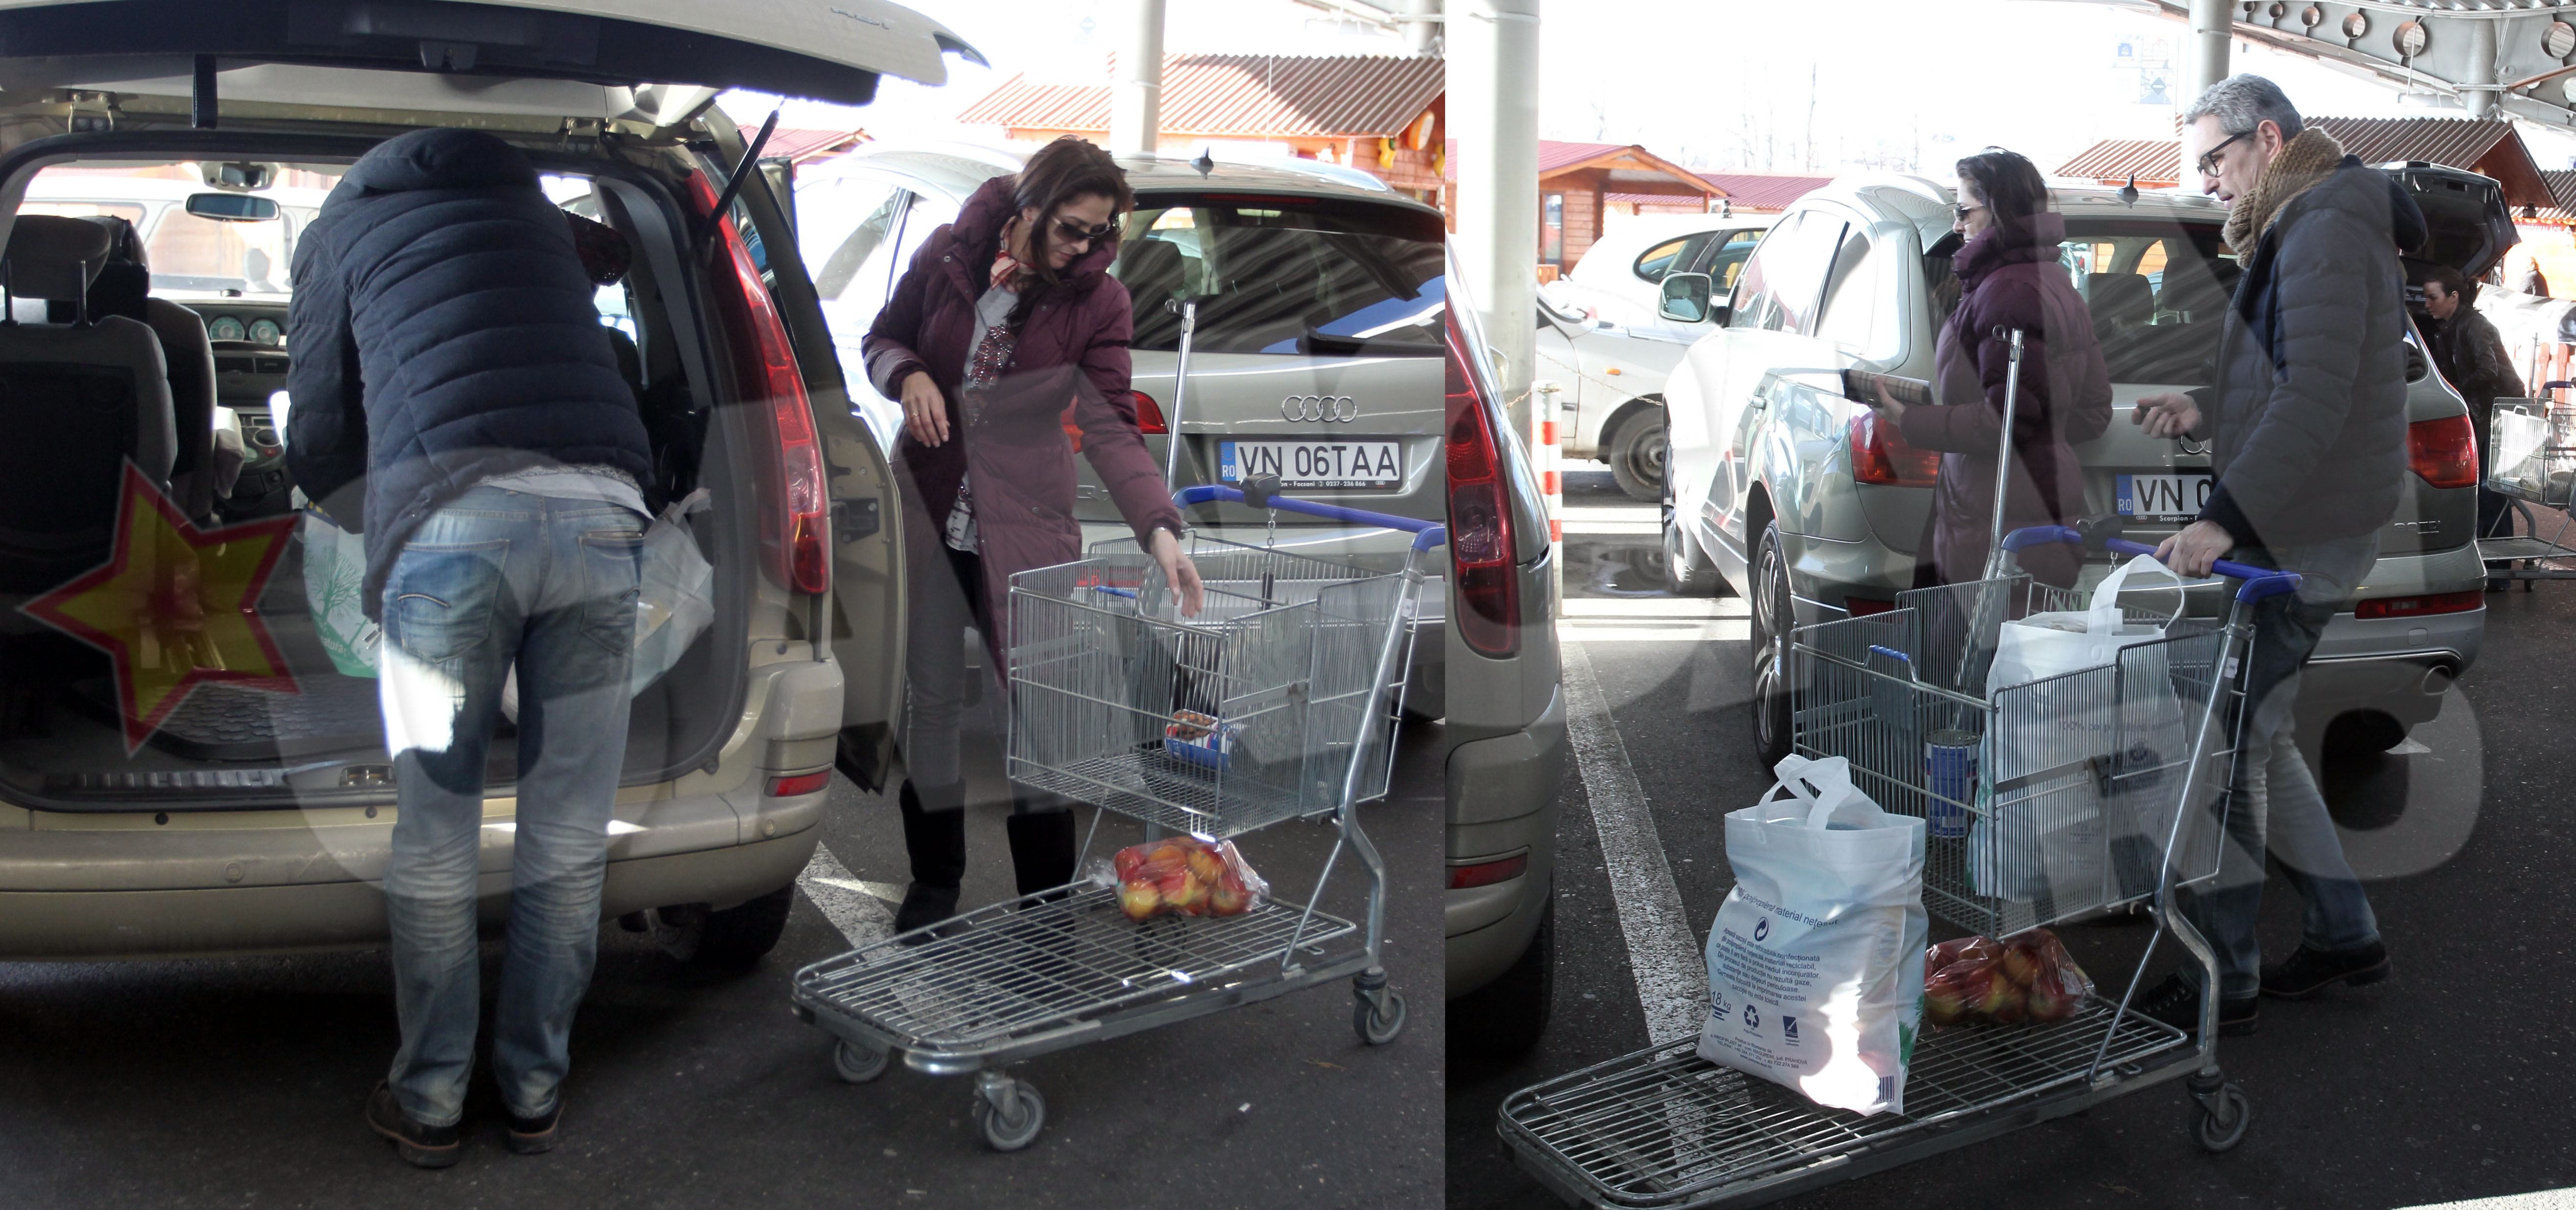 Zaharescu si iubita sa au plecat cu aceeasi masina de la hypermarket